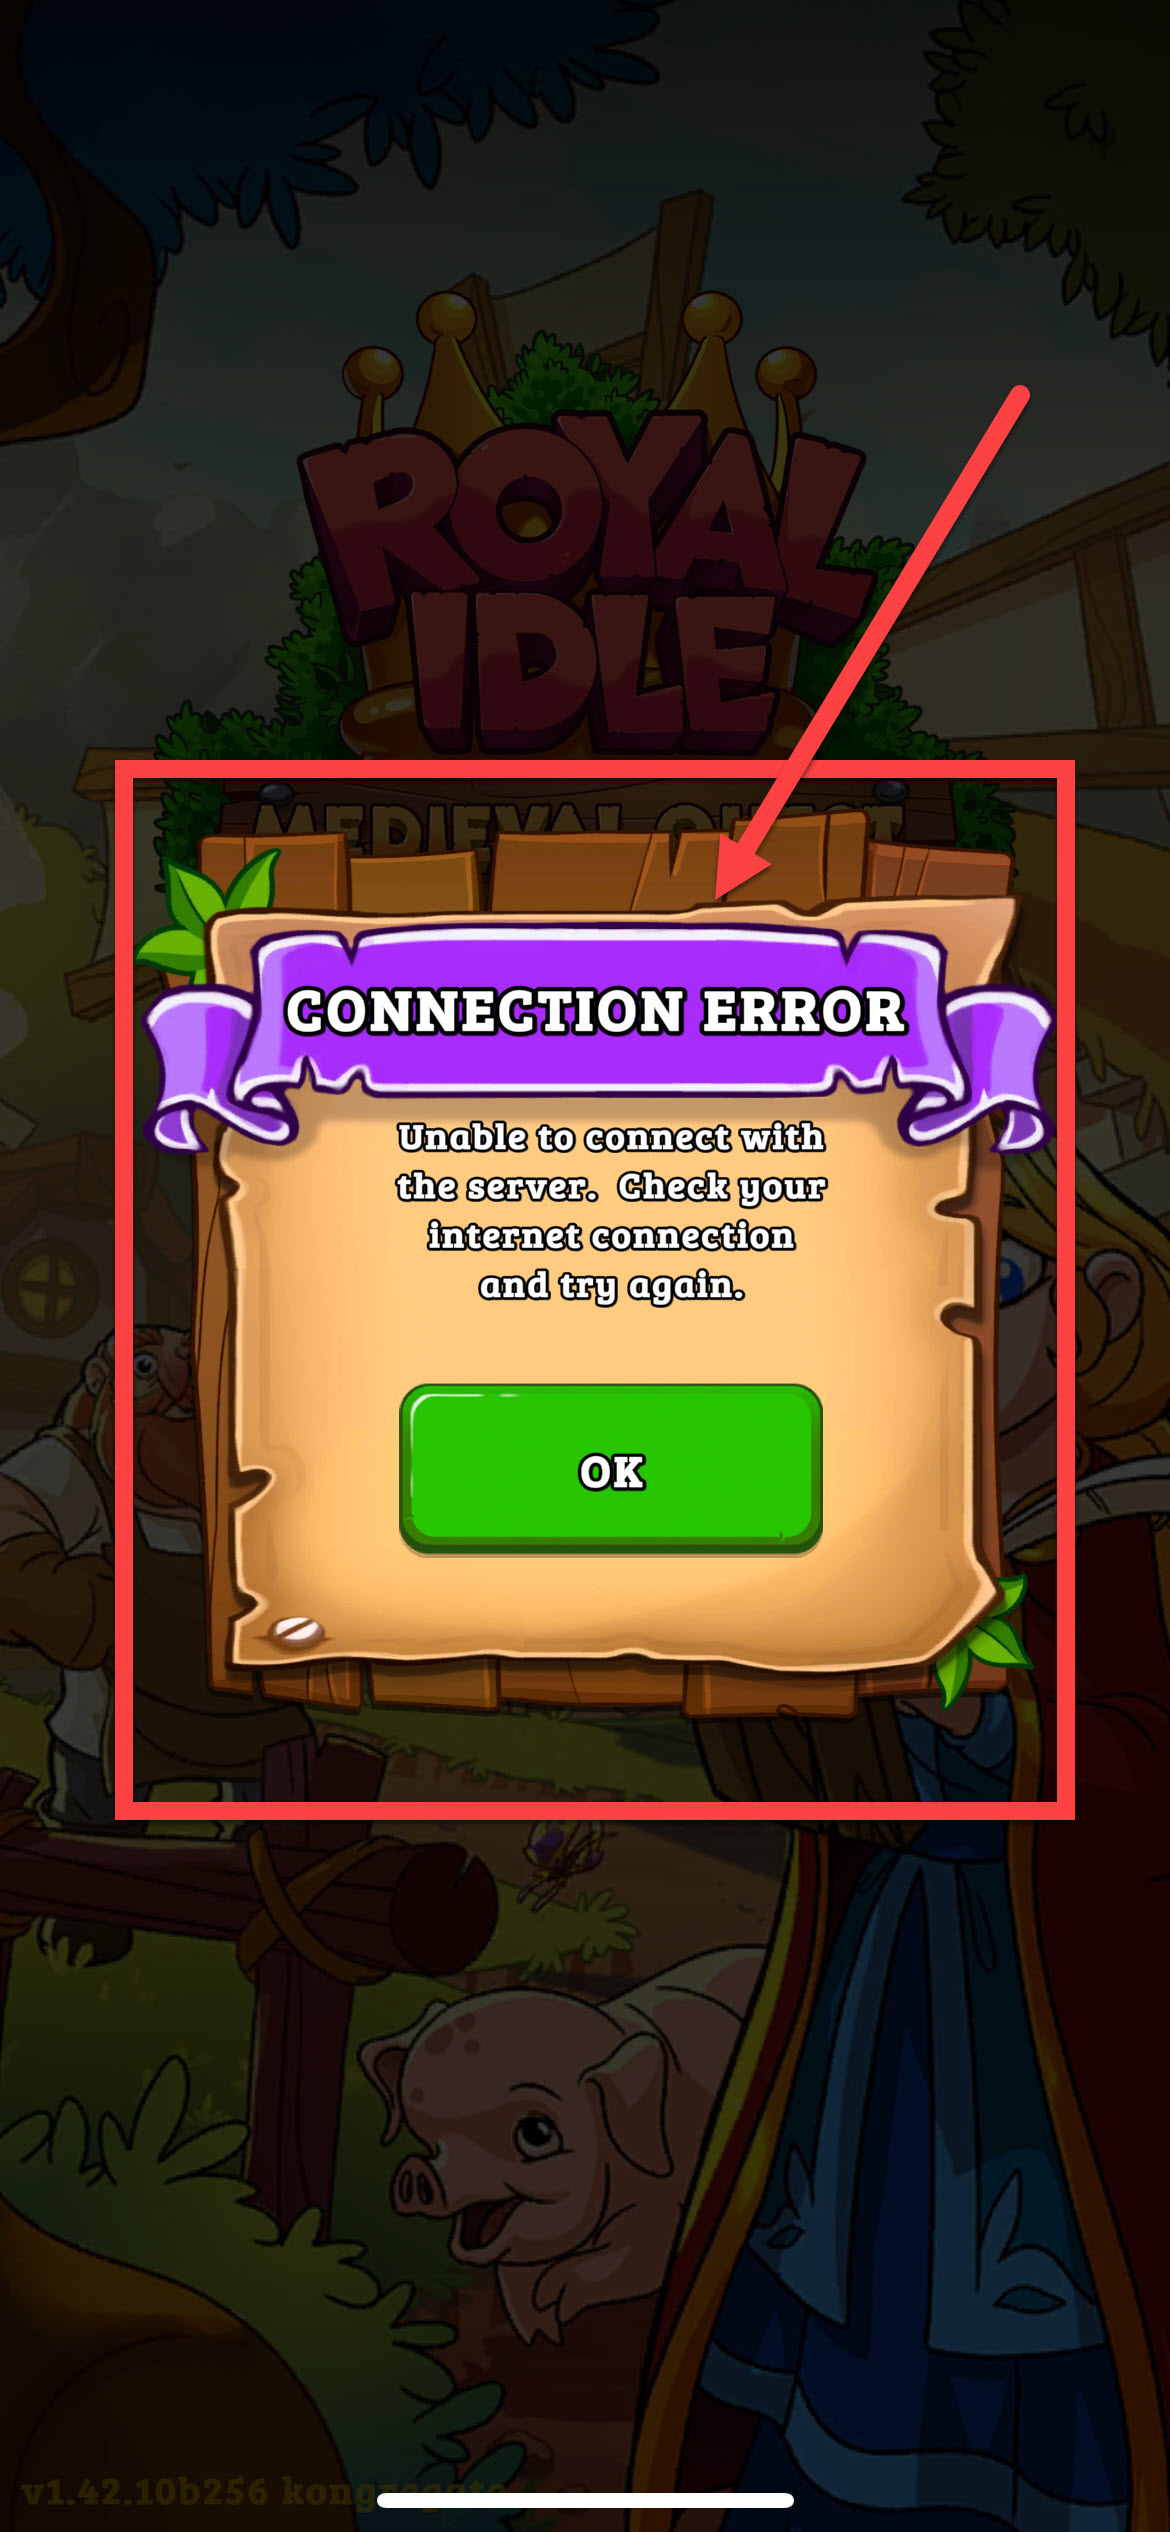 Connection error after scrolling “Royal Camp” menu